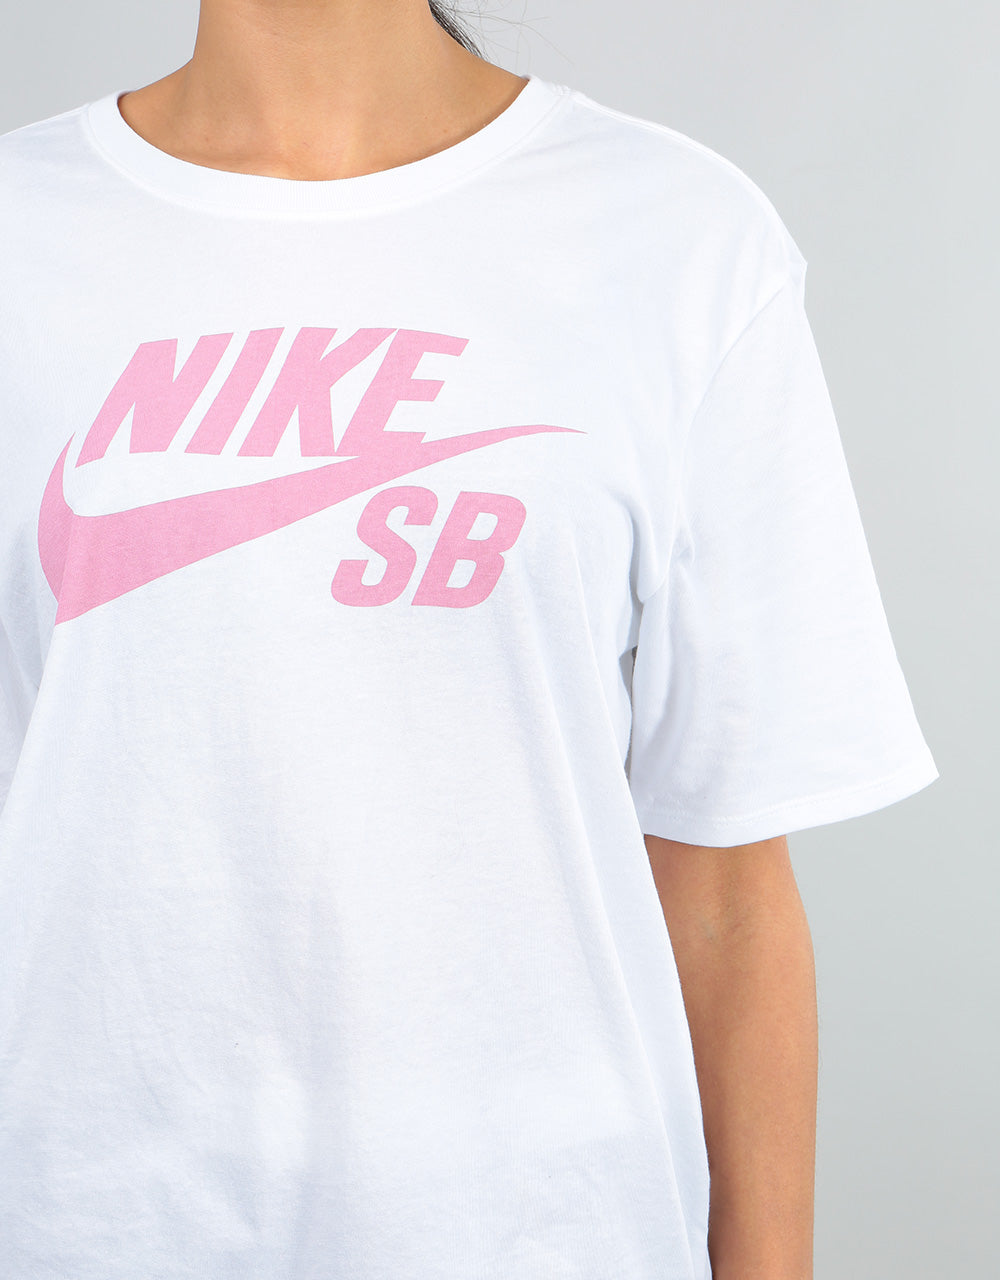 Nike SB Womens Oversized Logo T-Shirt - White/Elemental Pink